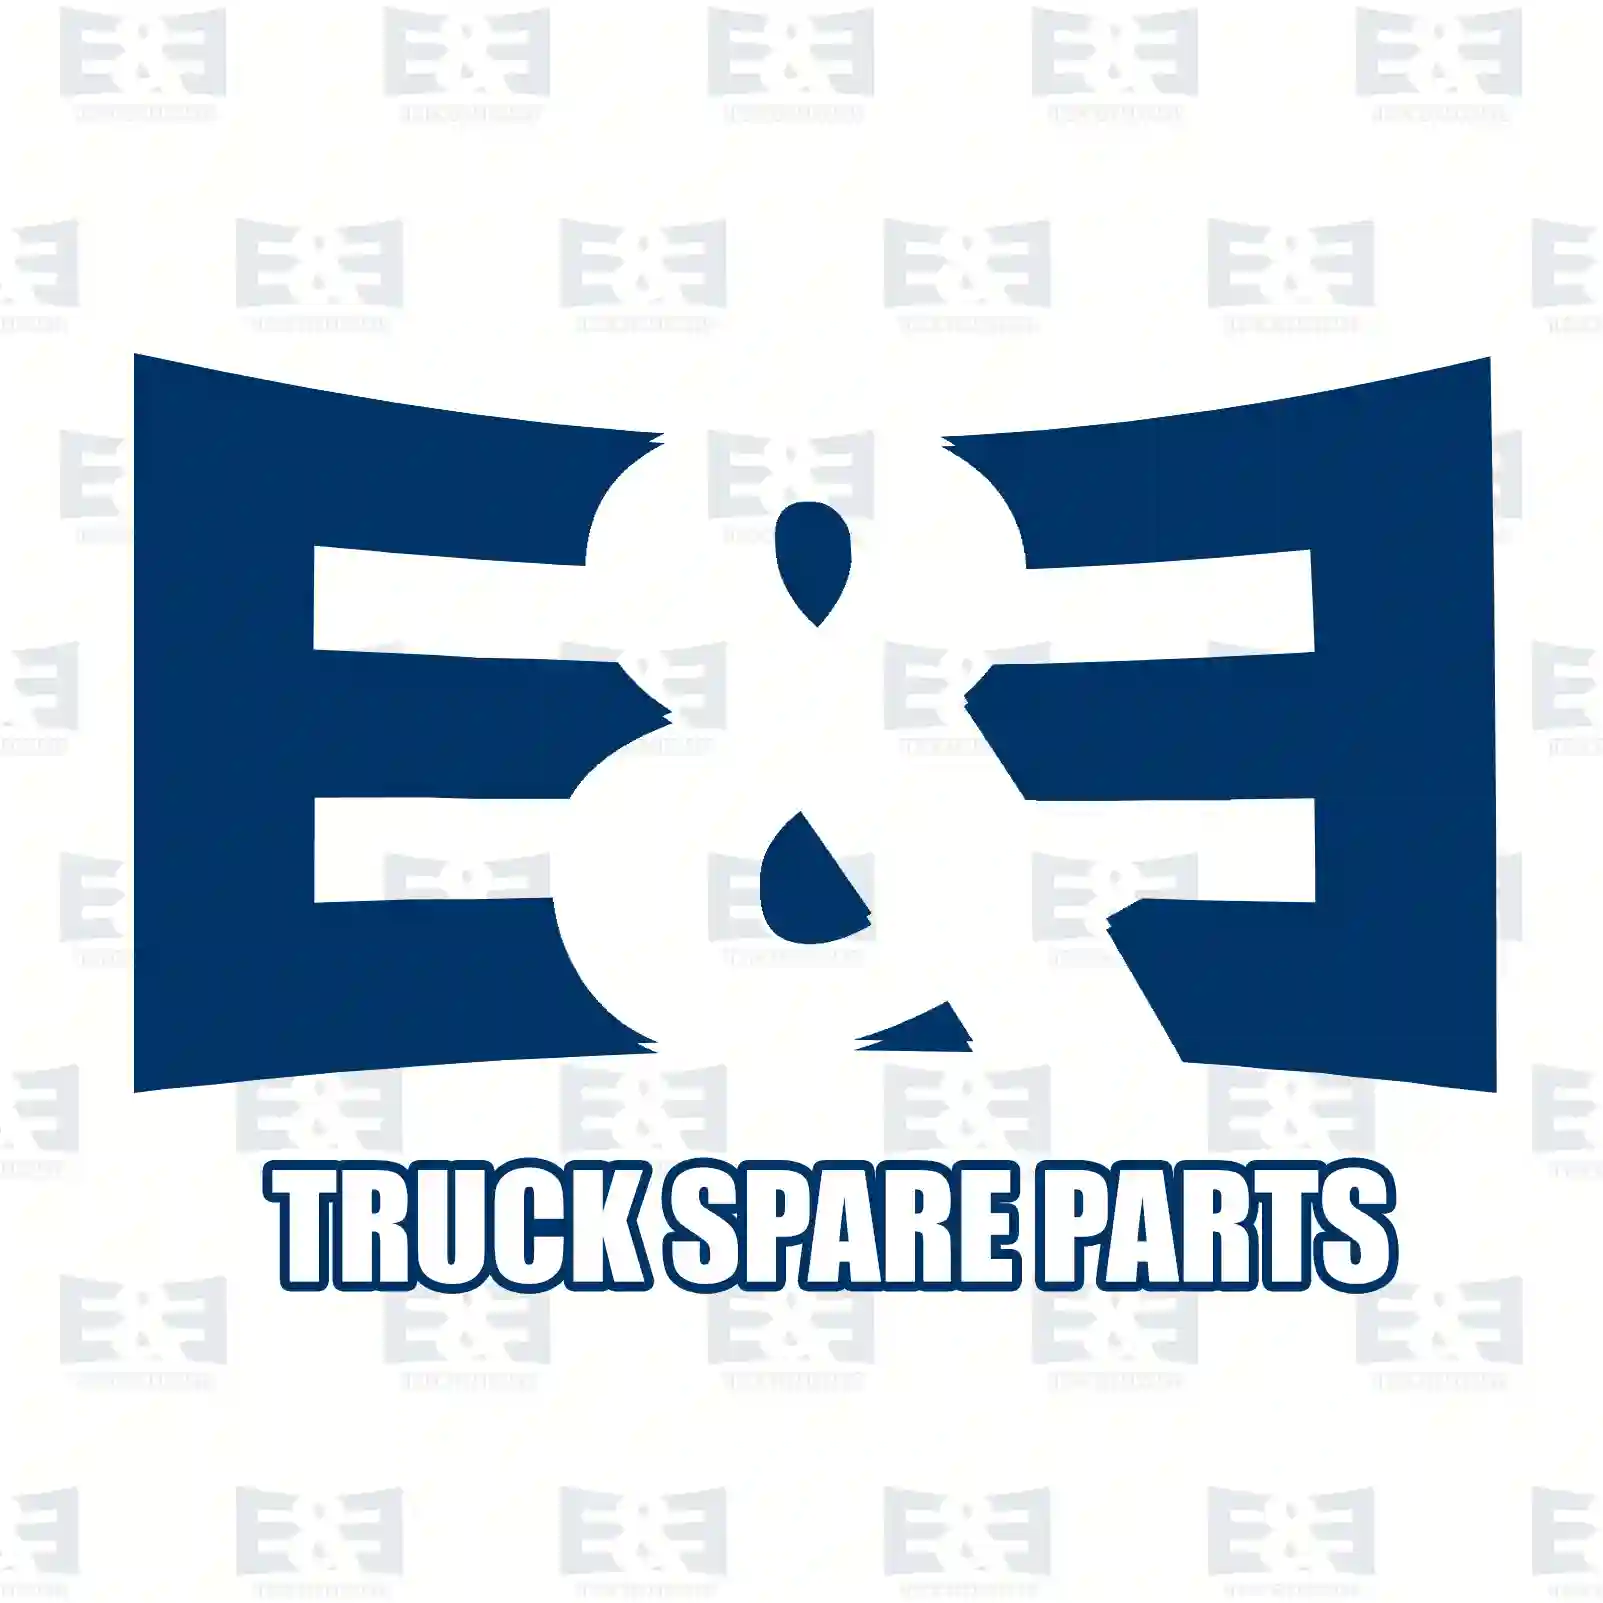 Ball joint, right hand thread, 2E2277815, 243664, 350270, ZG40139-0008, , ||  2E2277815 E&E Truck Spare Parts | Truck Spare Parts, Auotomotive Spare Parts Ball joint, right hand thread, 2E2277815, 243664, 350270, ZG40139-0008, , ||  2E2277815 E&E Truck Spare Parts | Truck Spare Parts, Auotomotive Spare Parts